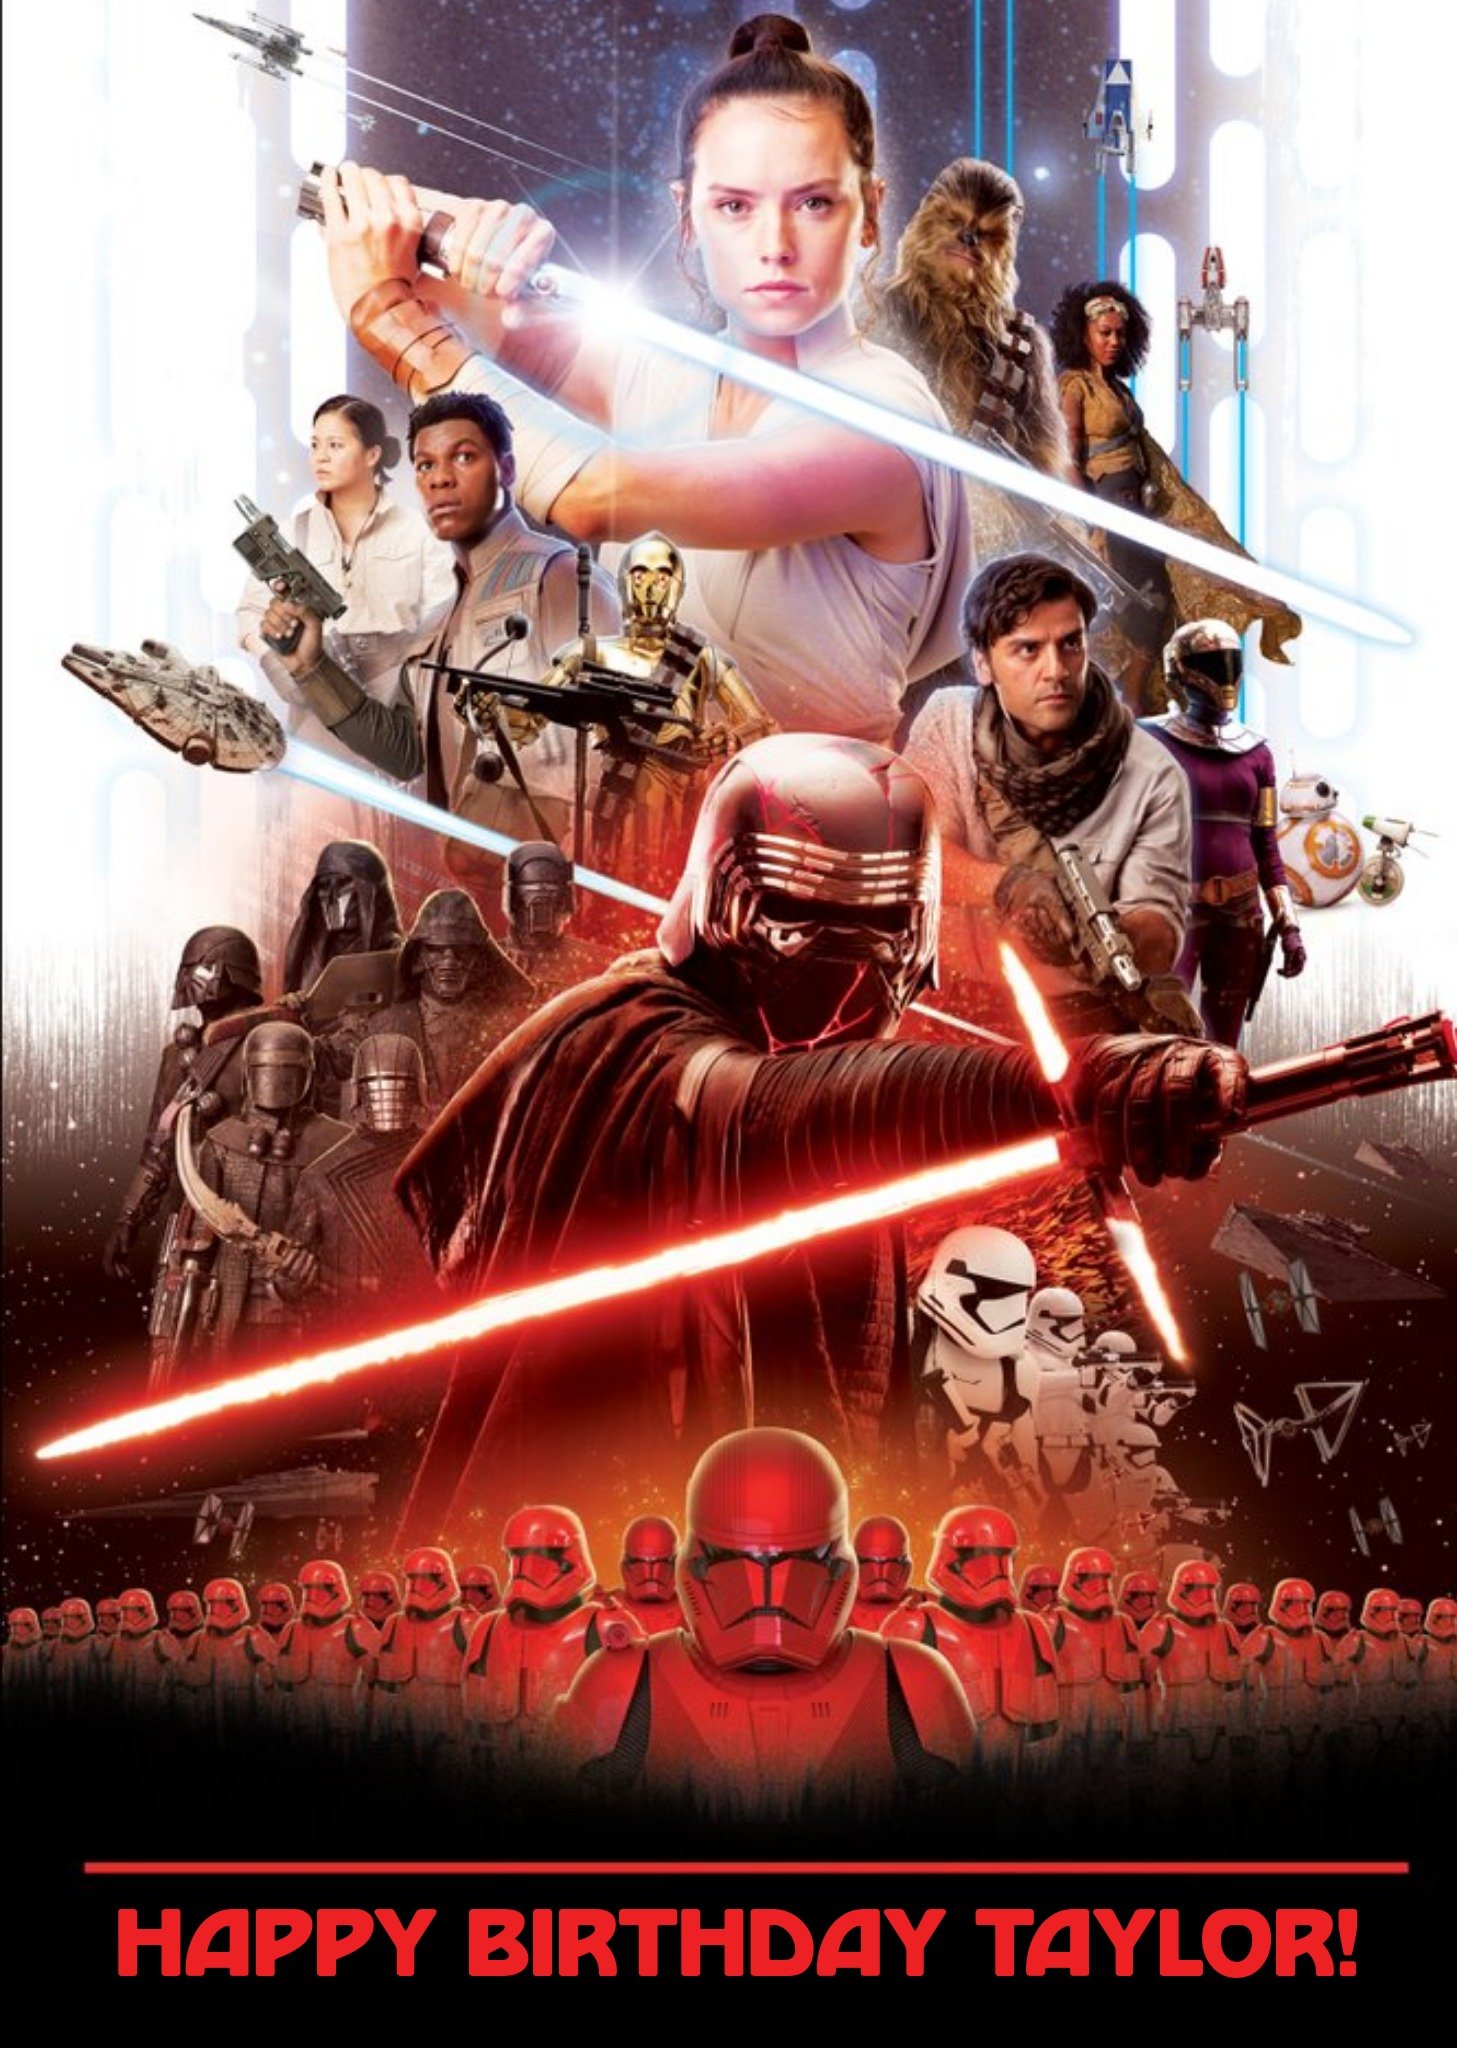 Disney Star Wars Episode 9 The Rise Of Skywalker Film Birthday Card Ecard